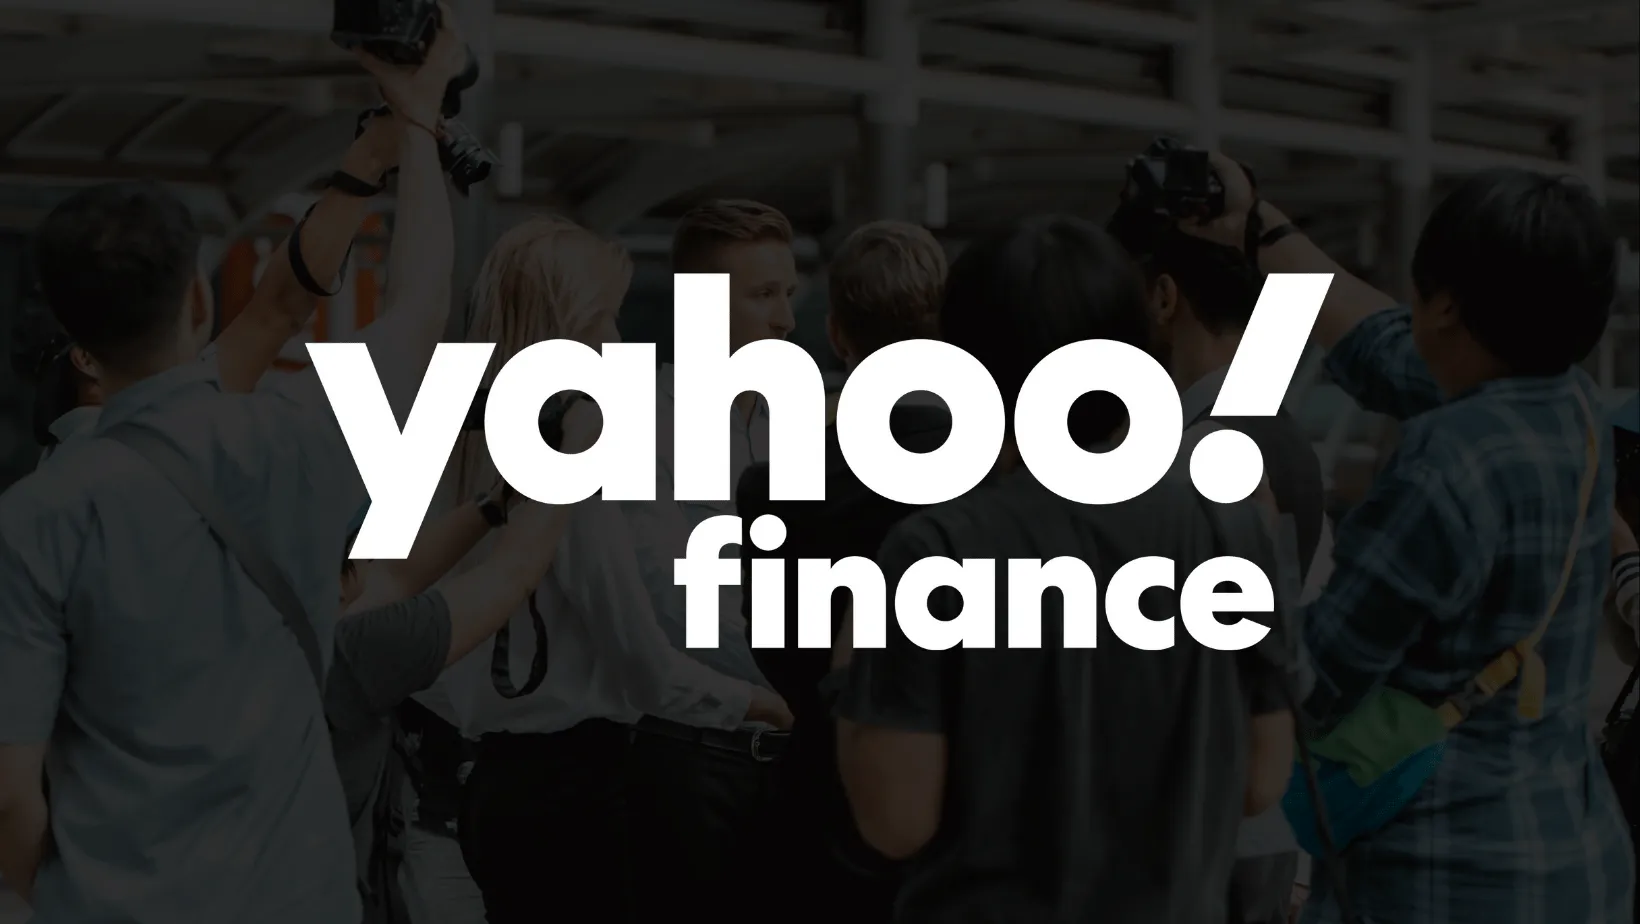 White Yahoo! Finance logo over a dark background.